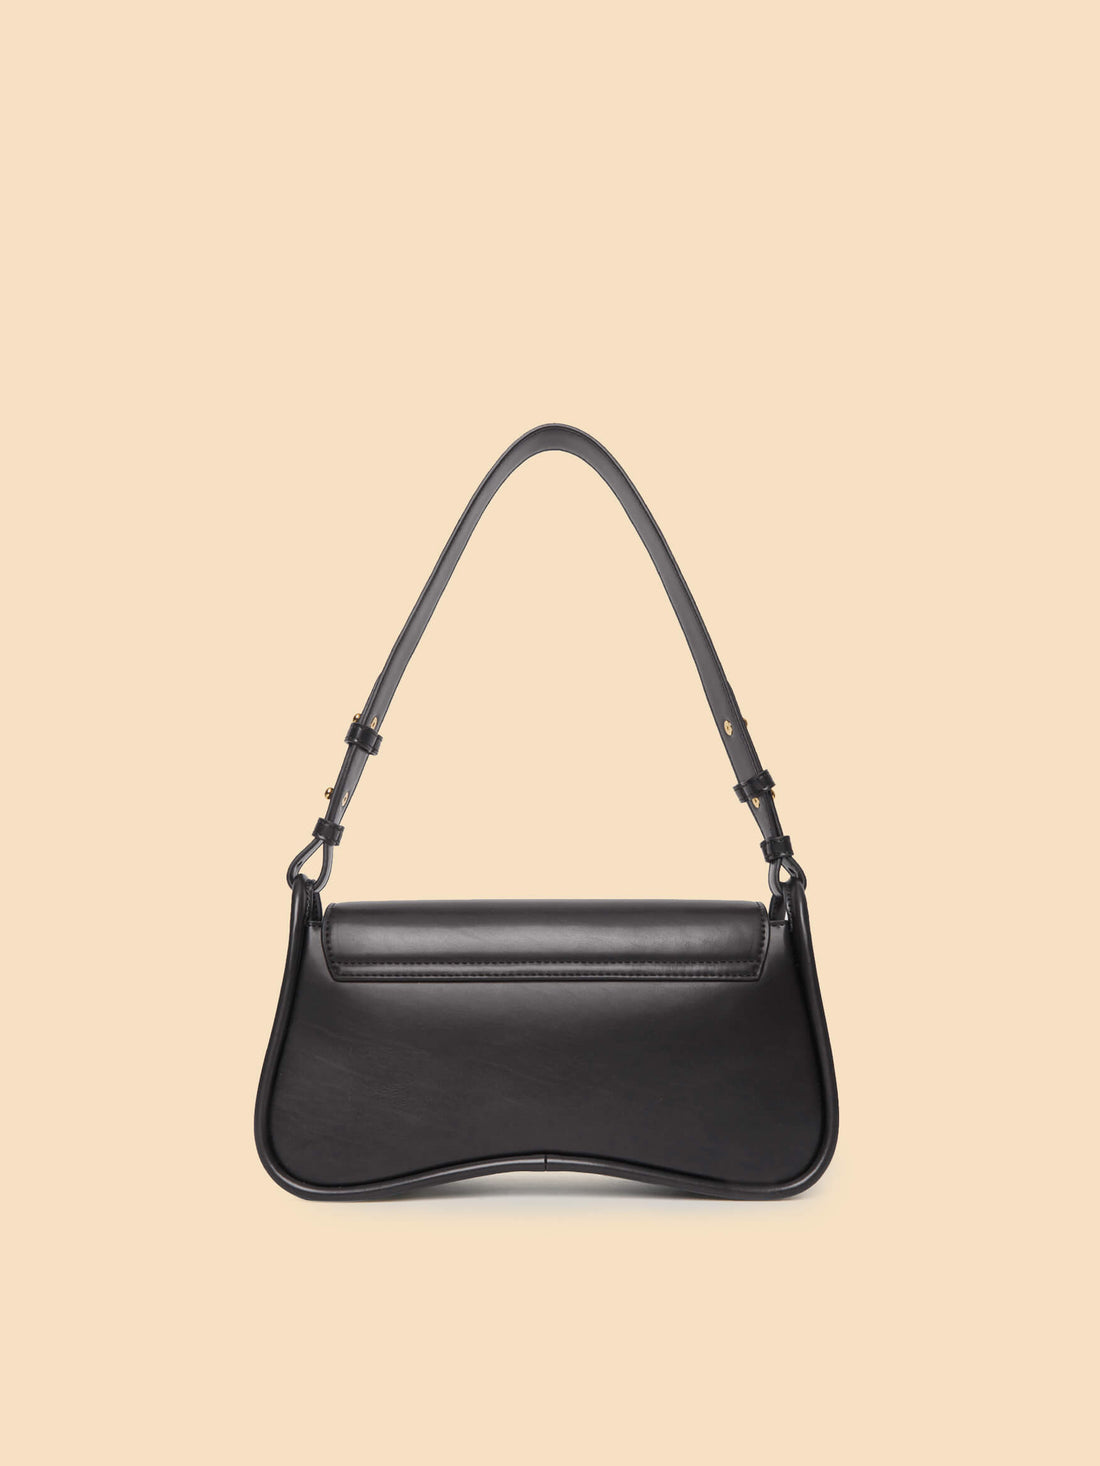 SINBONO Zoe Shoulder Bag  Black - Sustainable Leather Bag